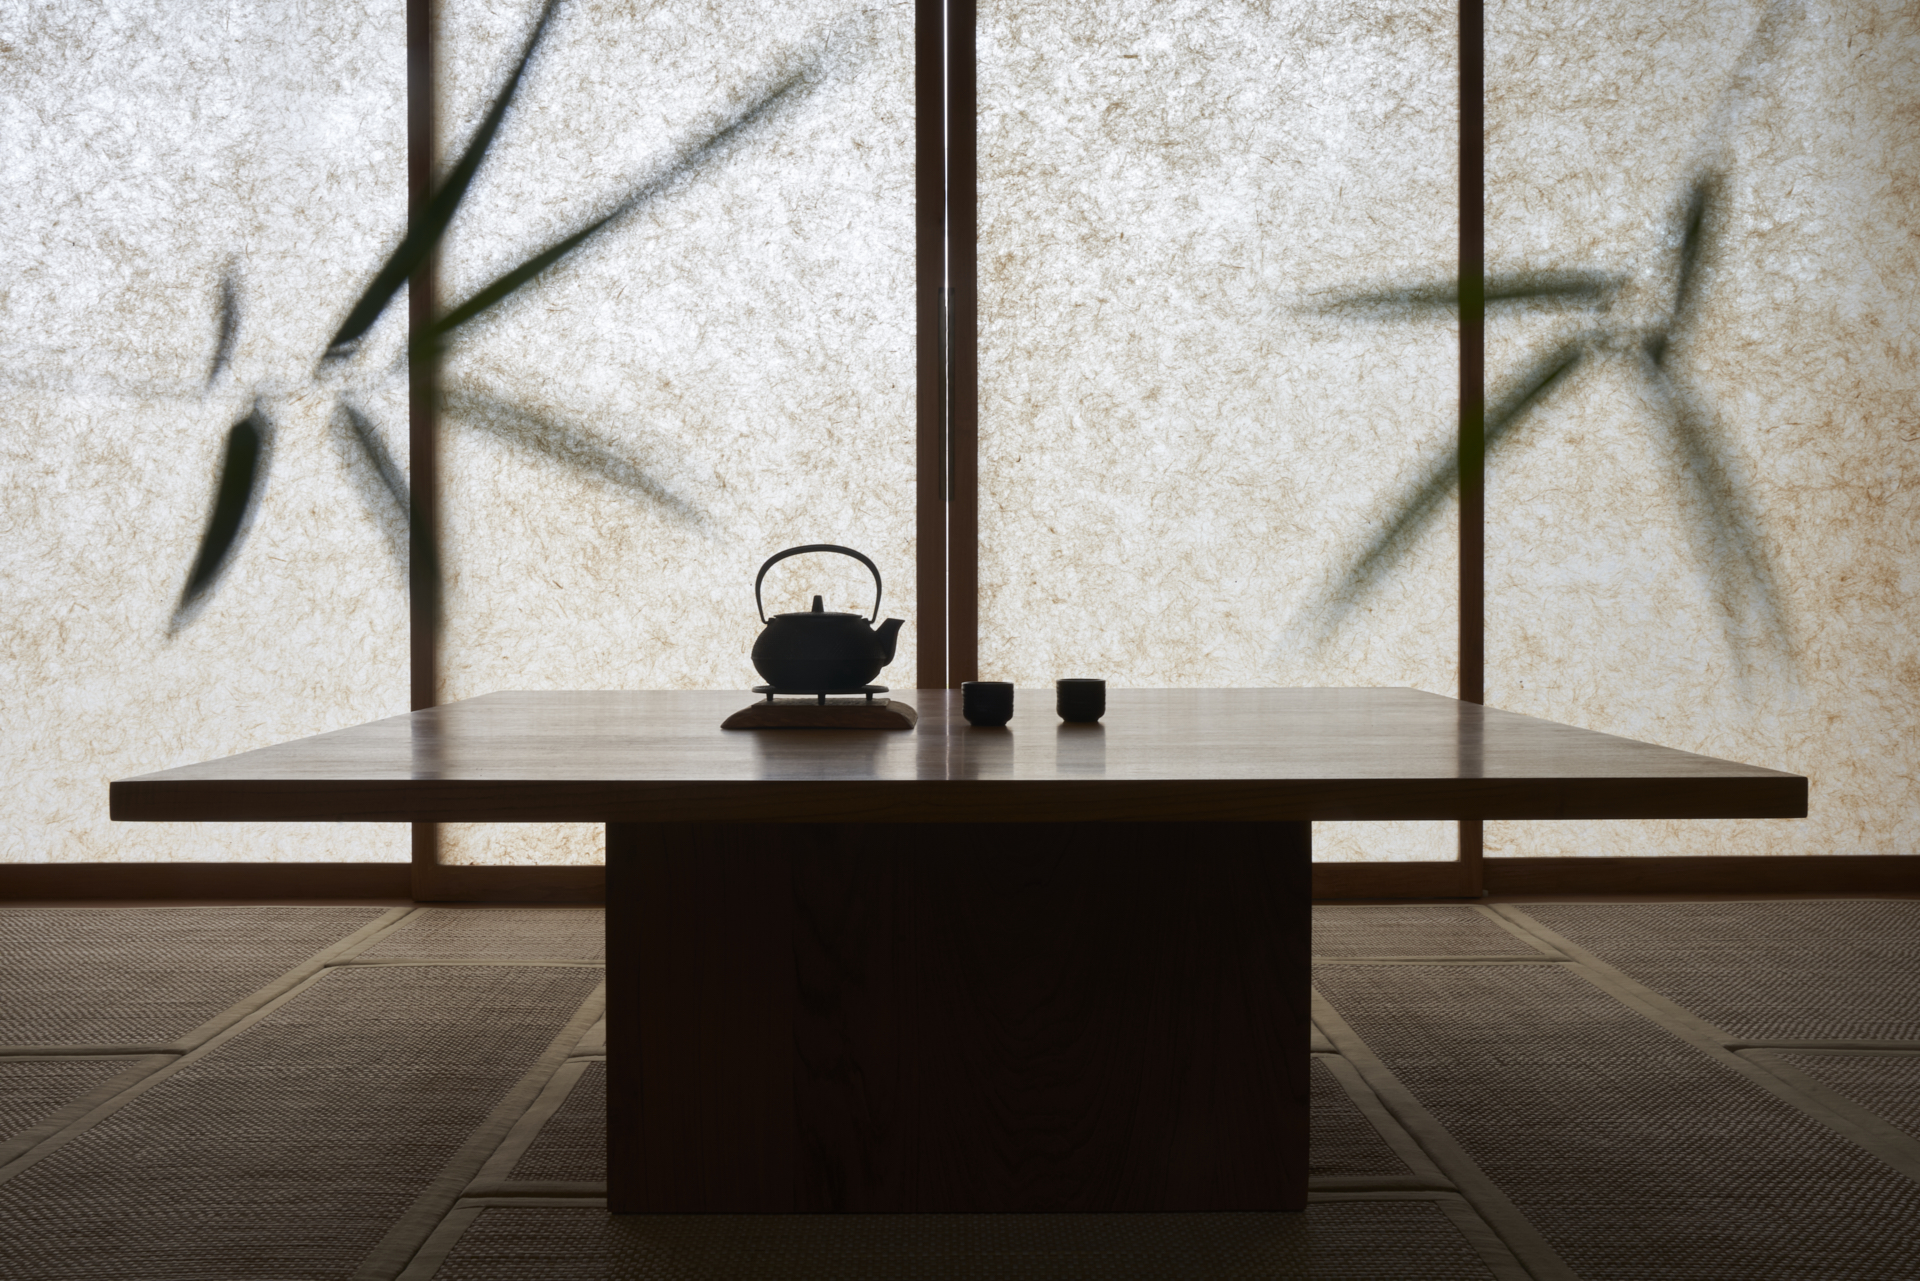 Her Private Studio in Bali | Japanese-Inspired Interior Design | Softer Volumes